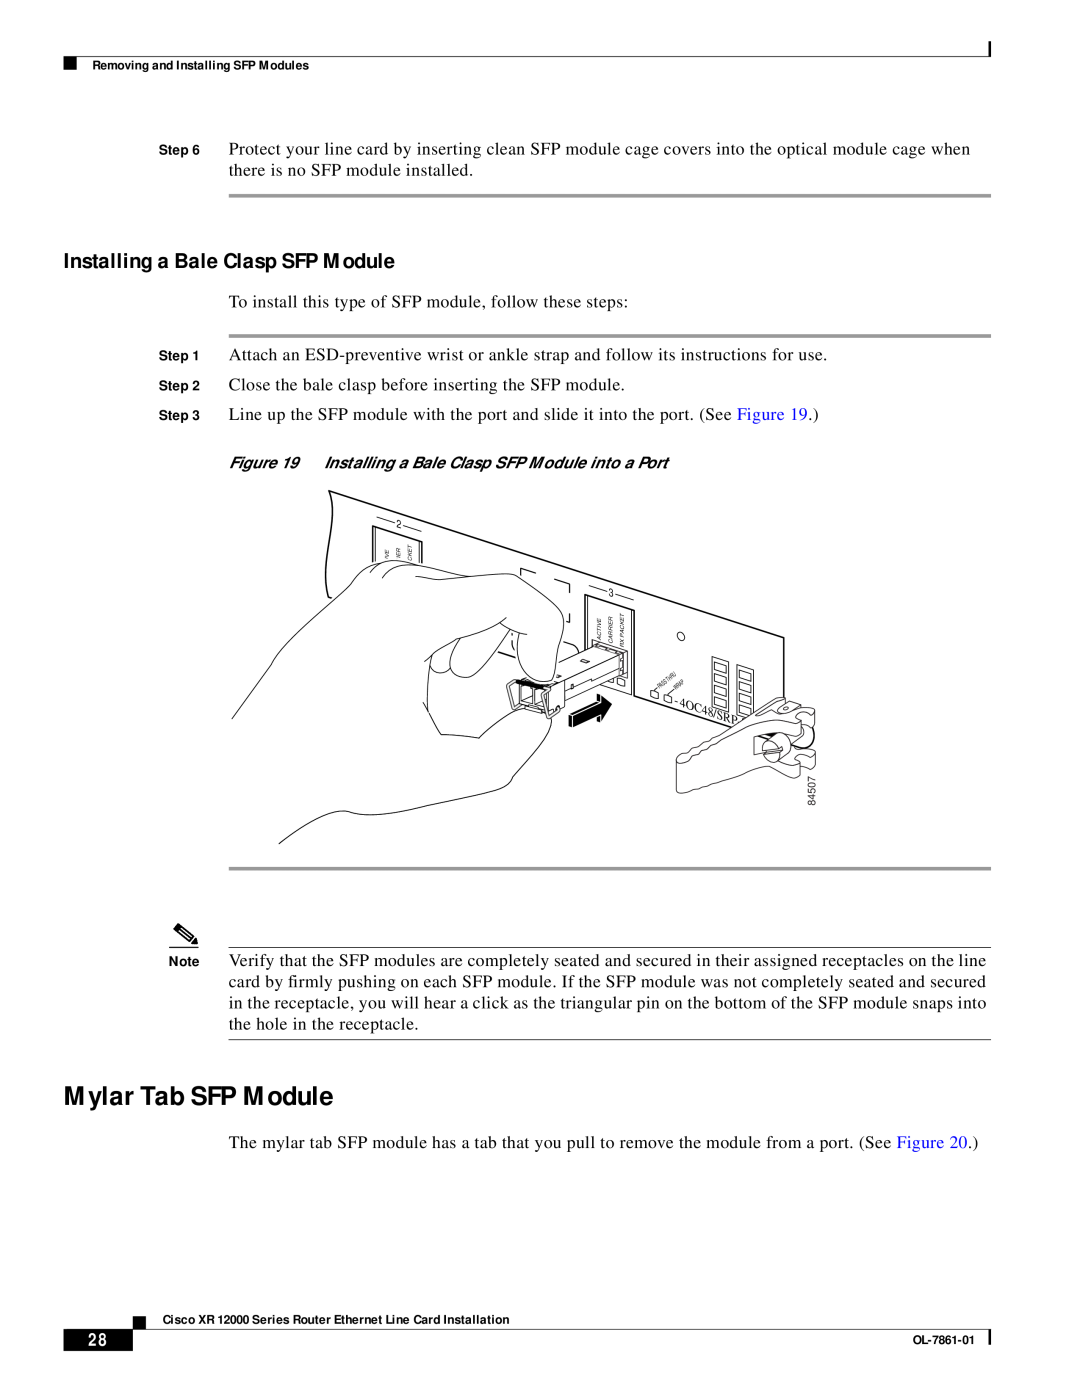 Cisco Systems OL-7861-01 manual Mylar Tab SFP Module, Installing a Bale Clasp SFP Module 